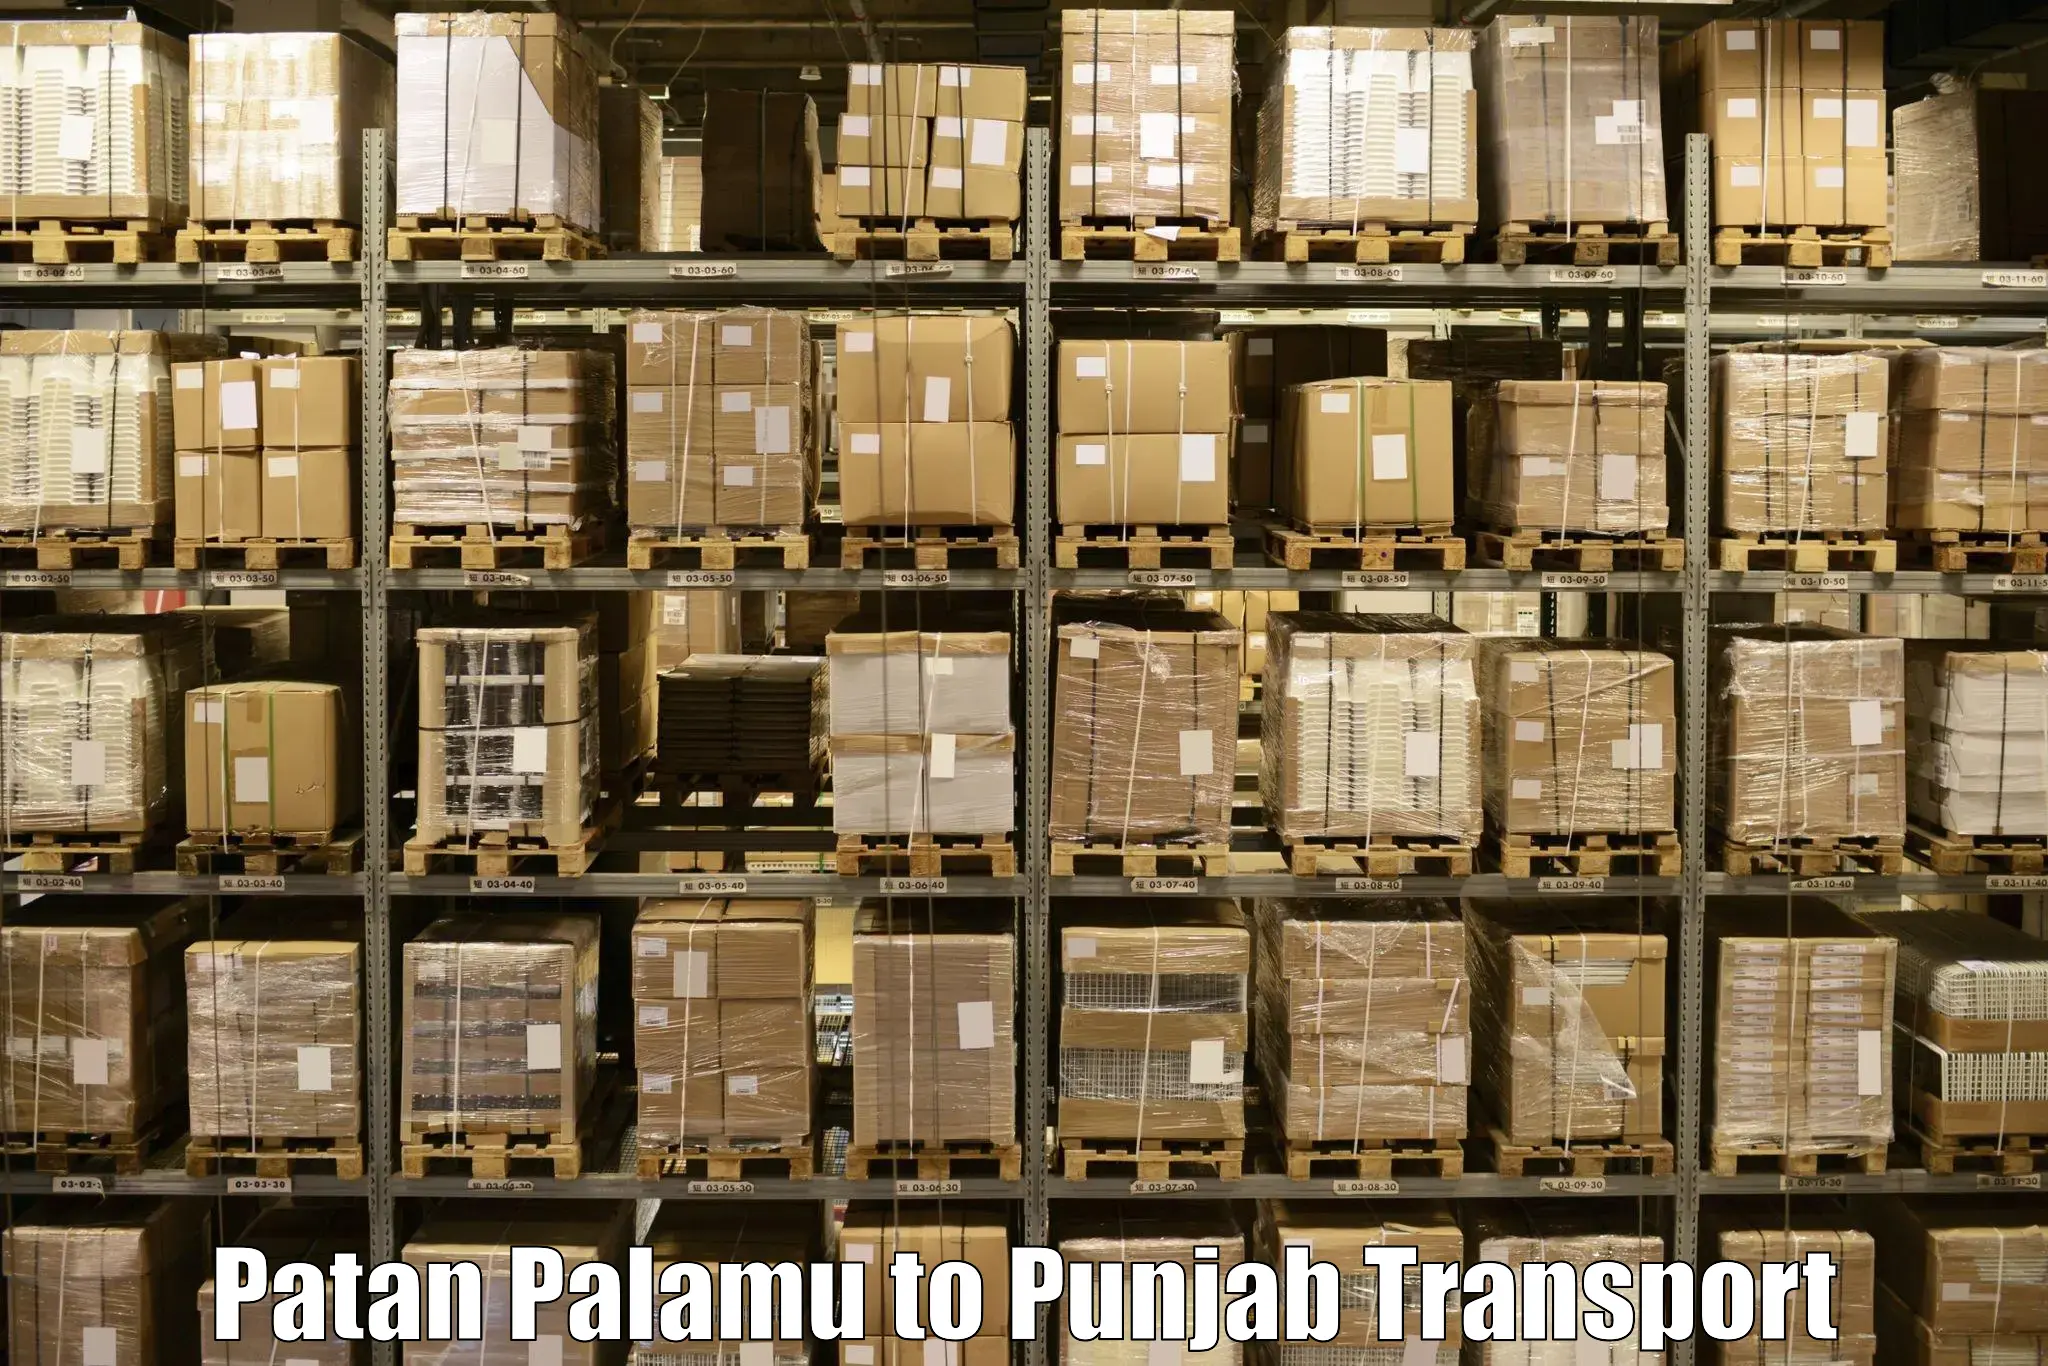 Transport shared services Patan Palamu to Pathankot